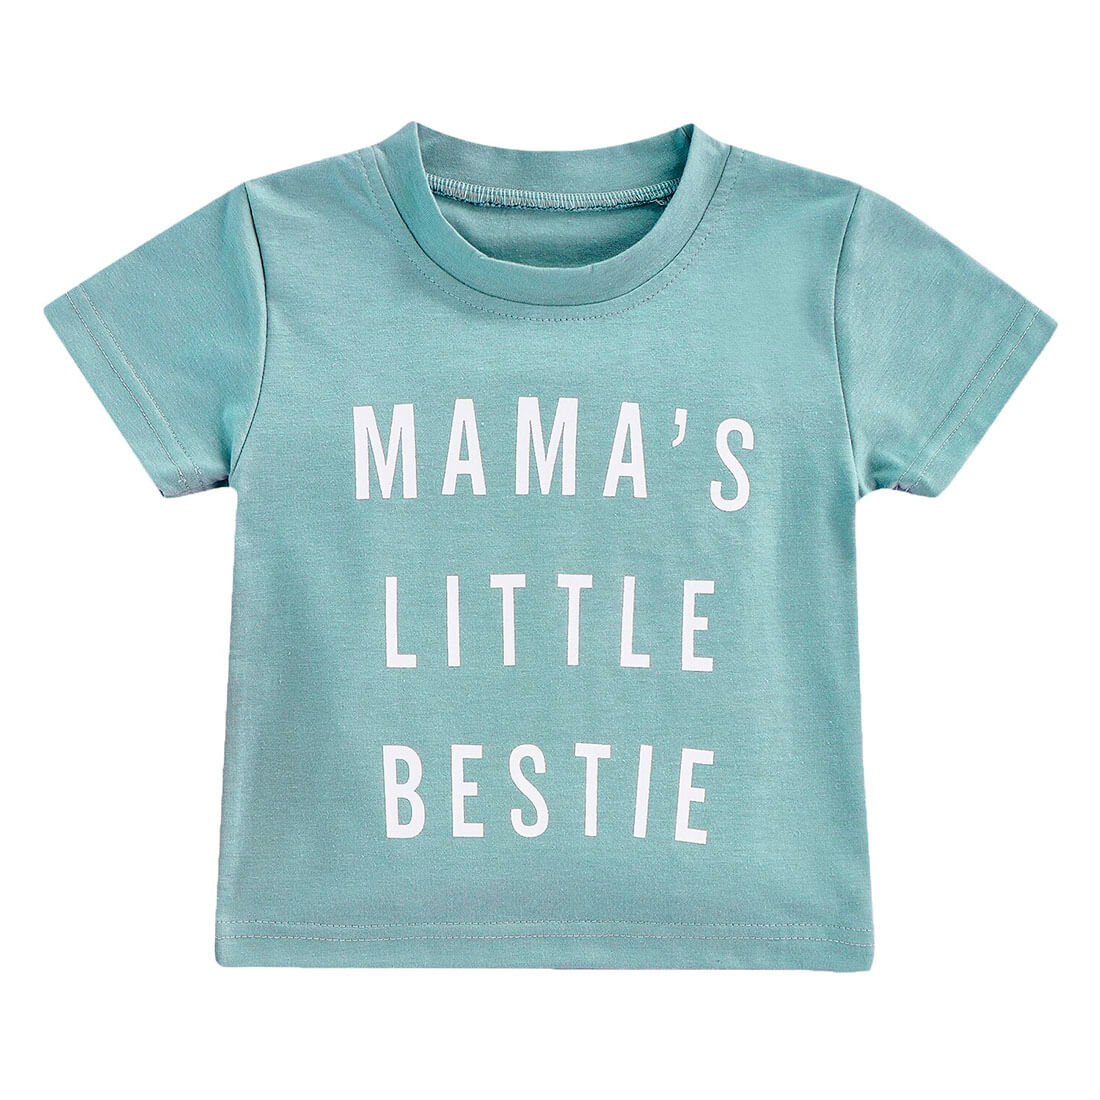 Mama's Little Bestie Toddler Tee Blue 2T 